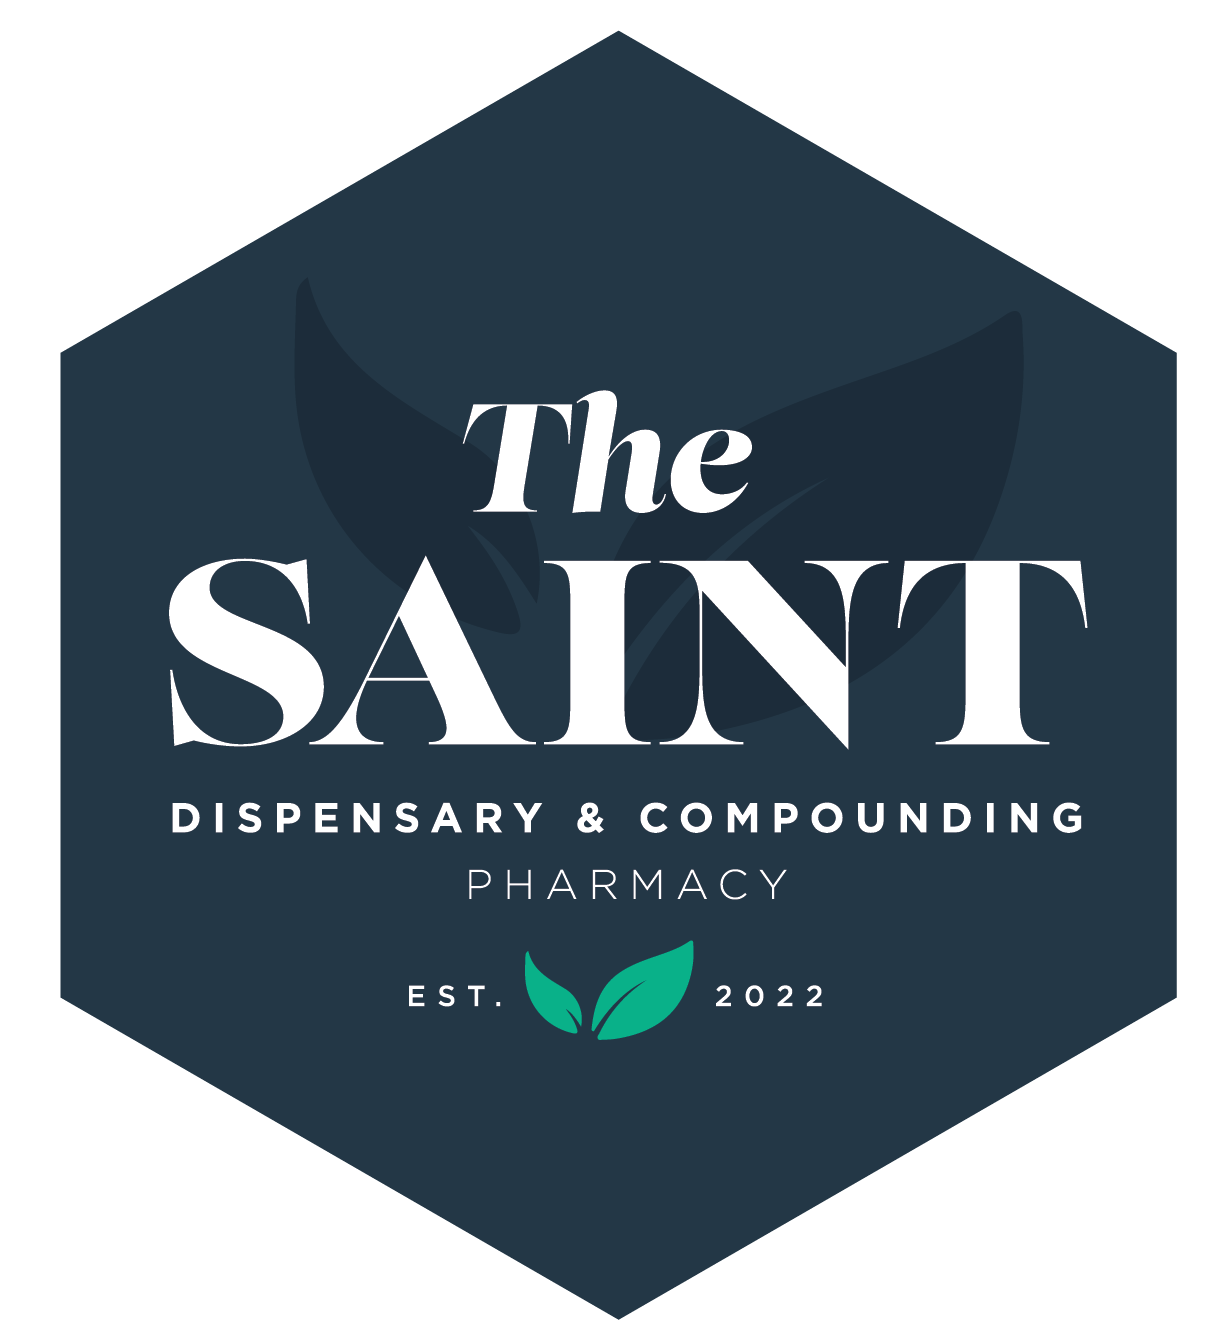 The Saint Dispensary